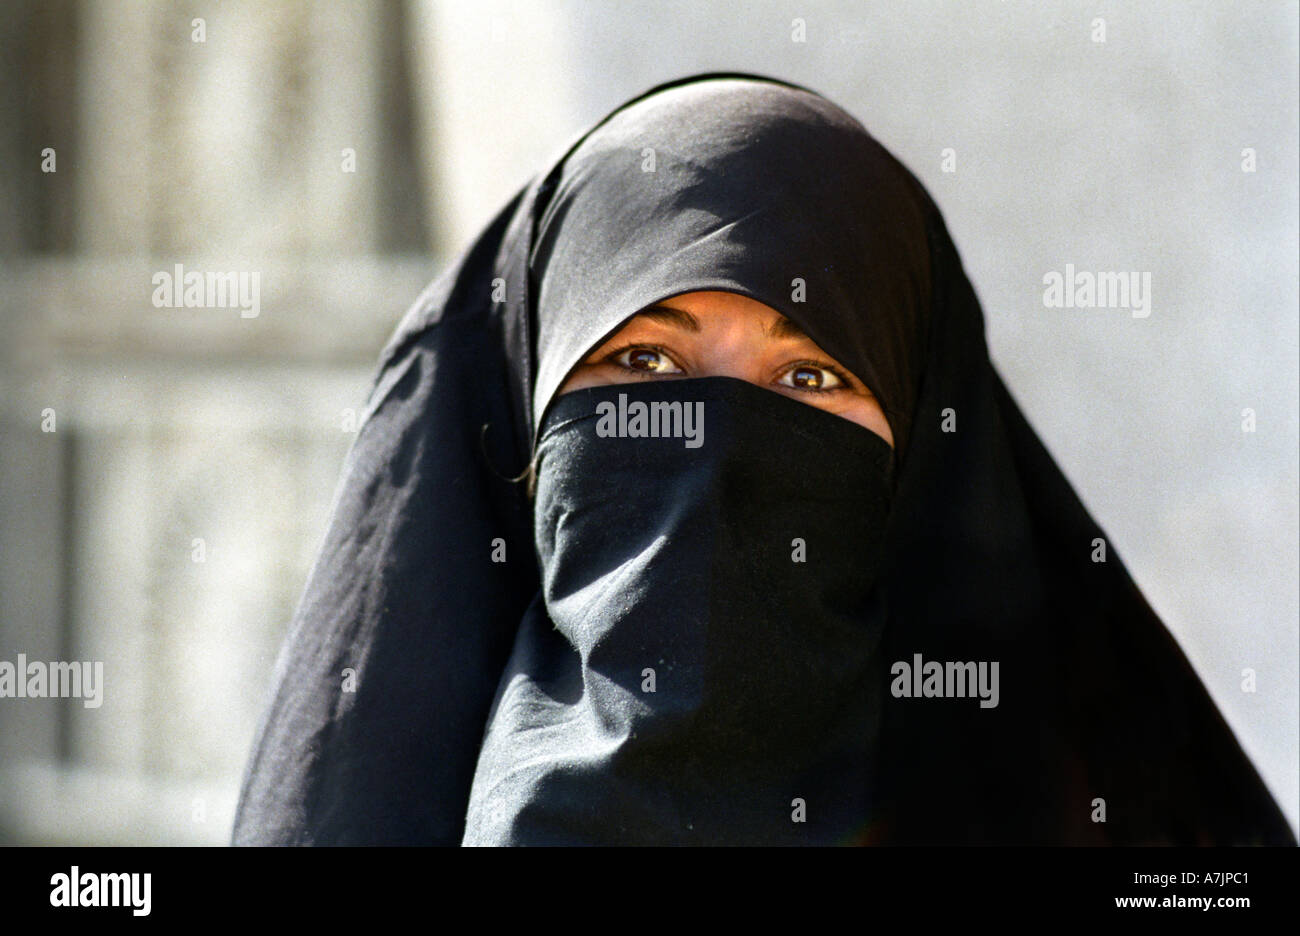 muslim veil covering face